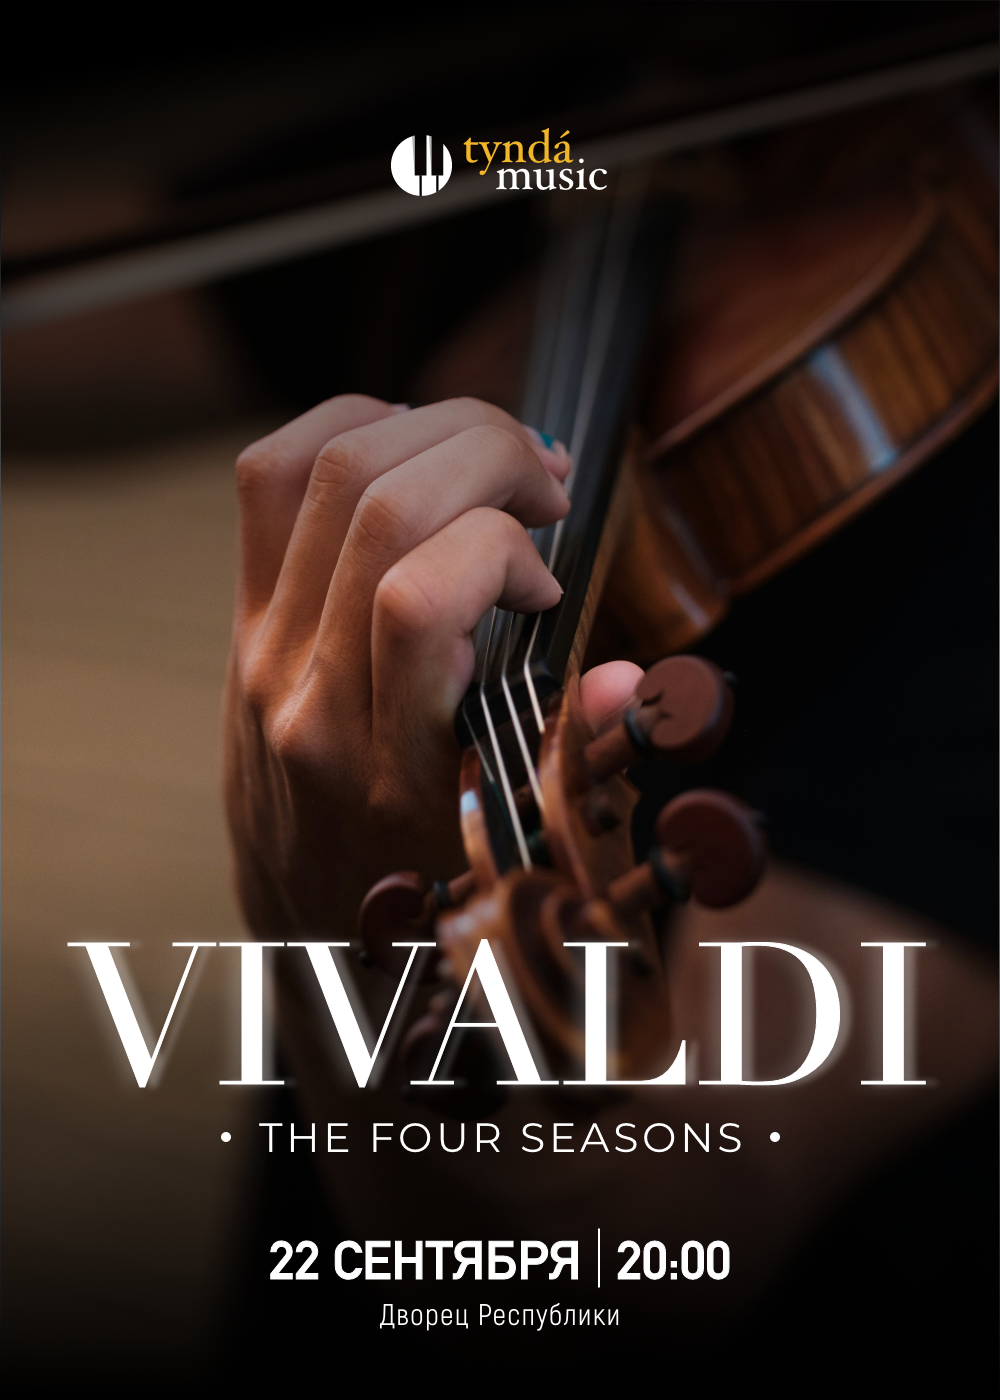 TyndaMusic - Vivaldi. Four seasons Алматы қаласында